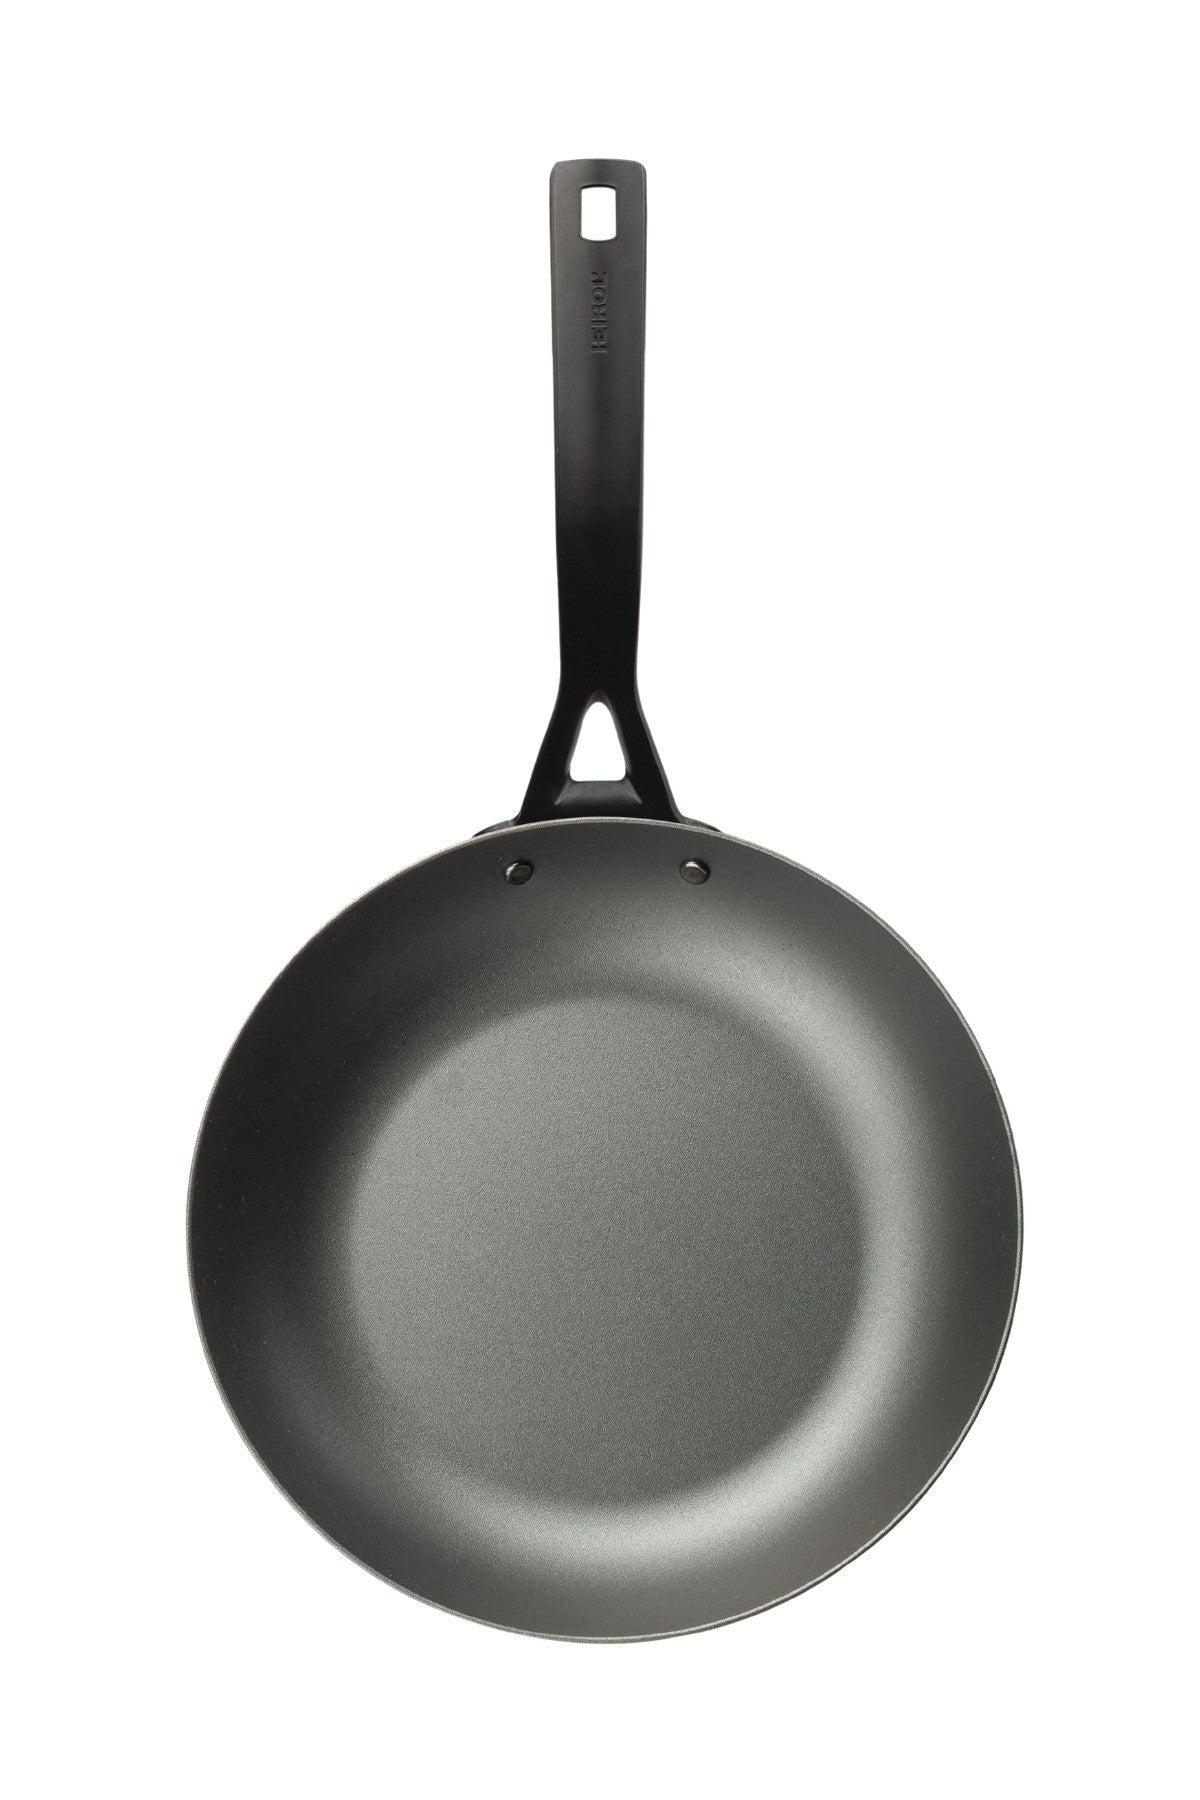 FRYING PAN 28 cm Blacksteel Pro